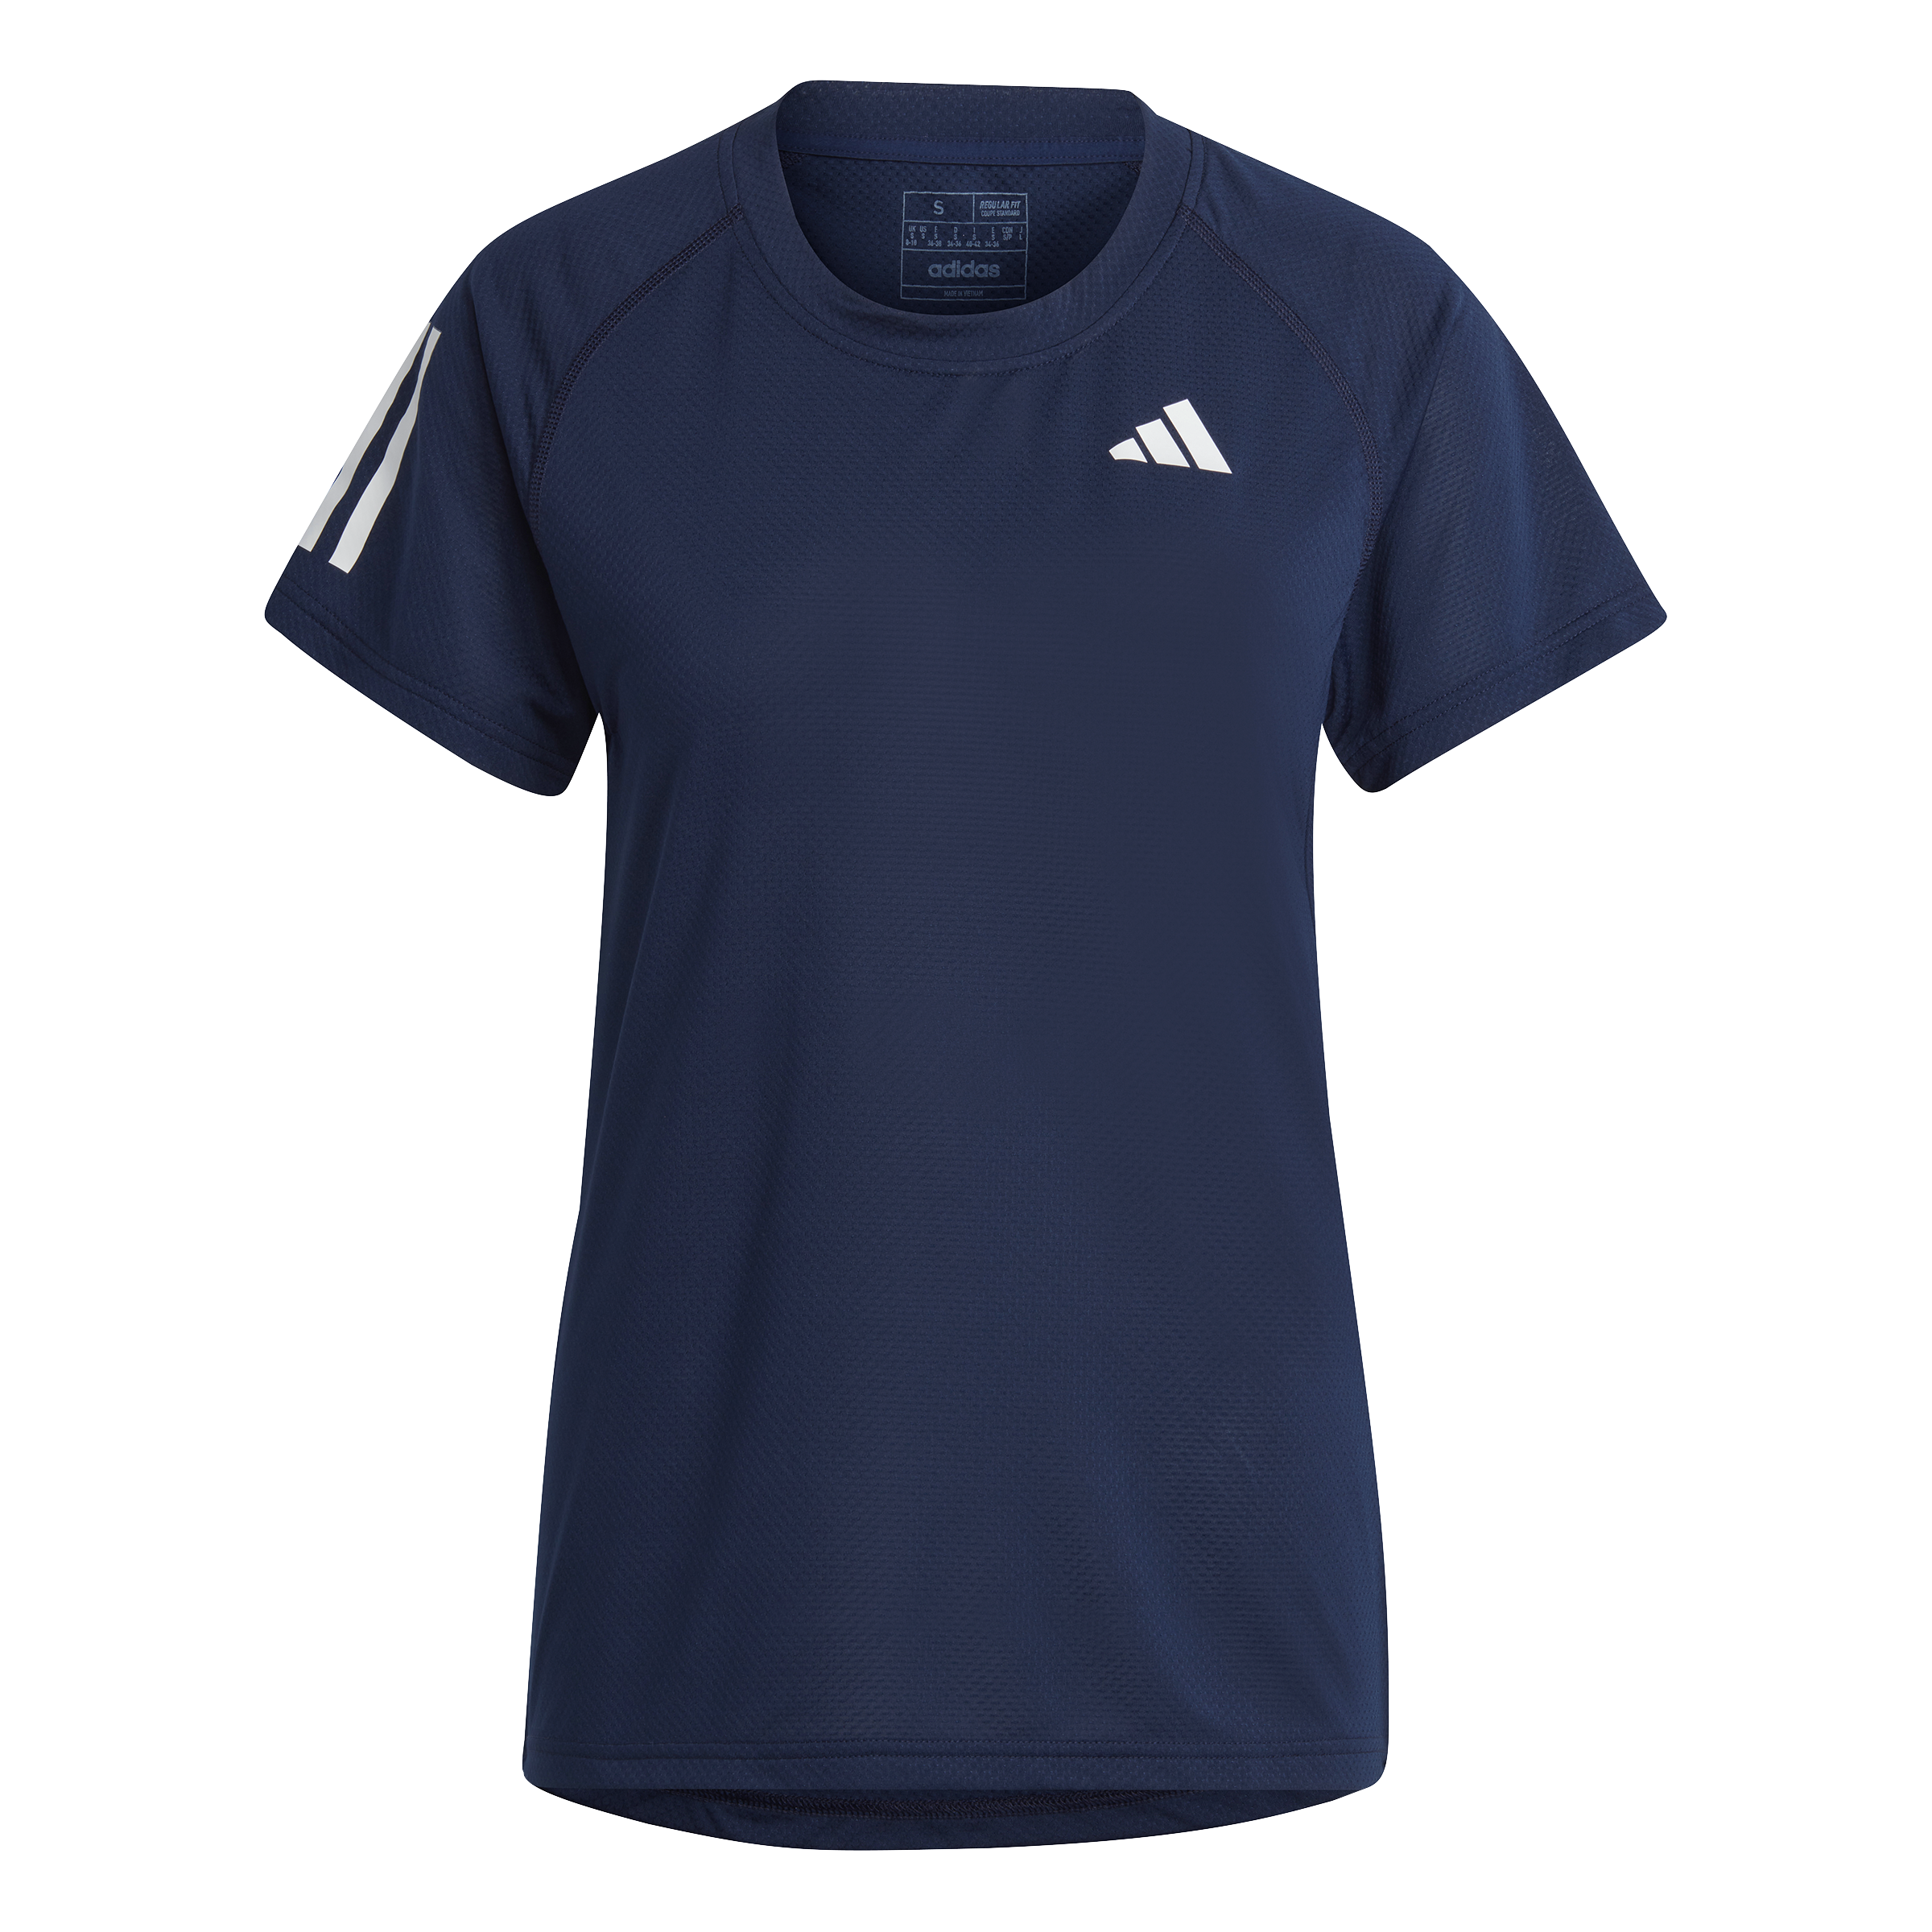 Adidas Club T-shirt Women (Navy) - XS